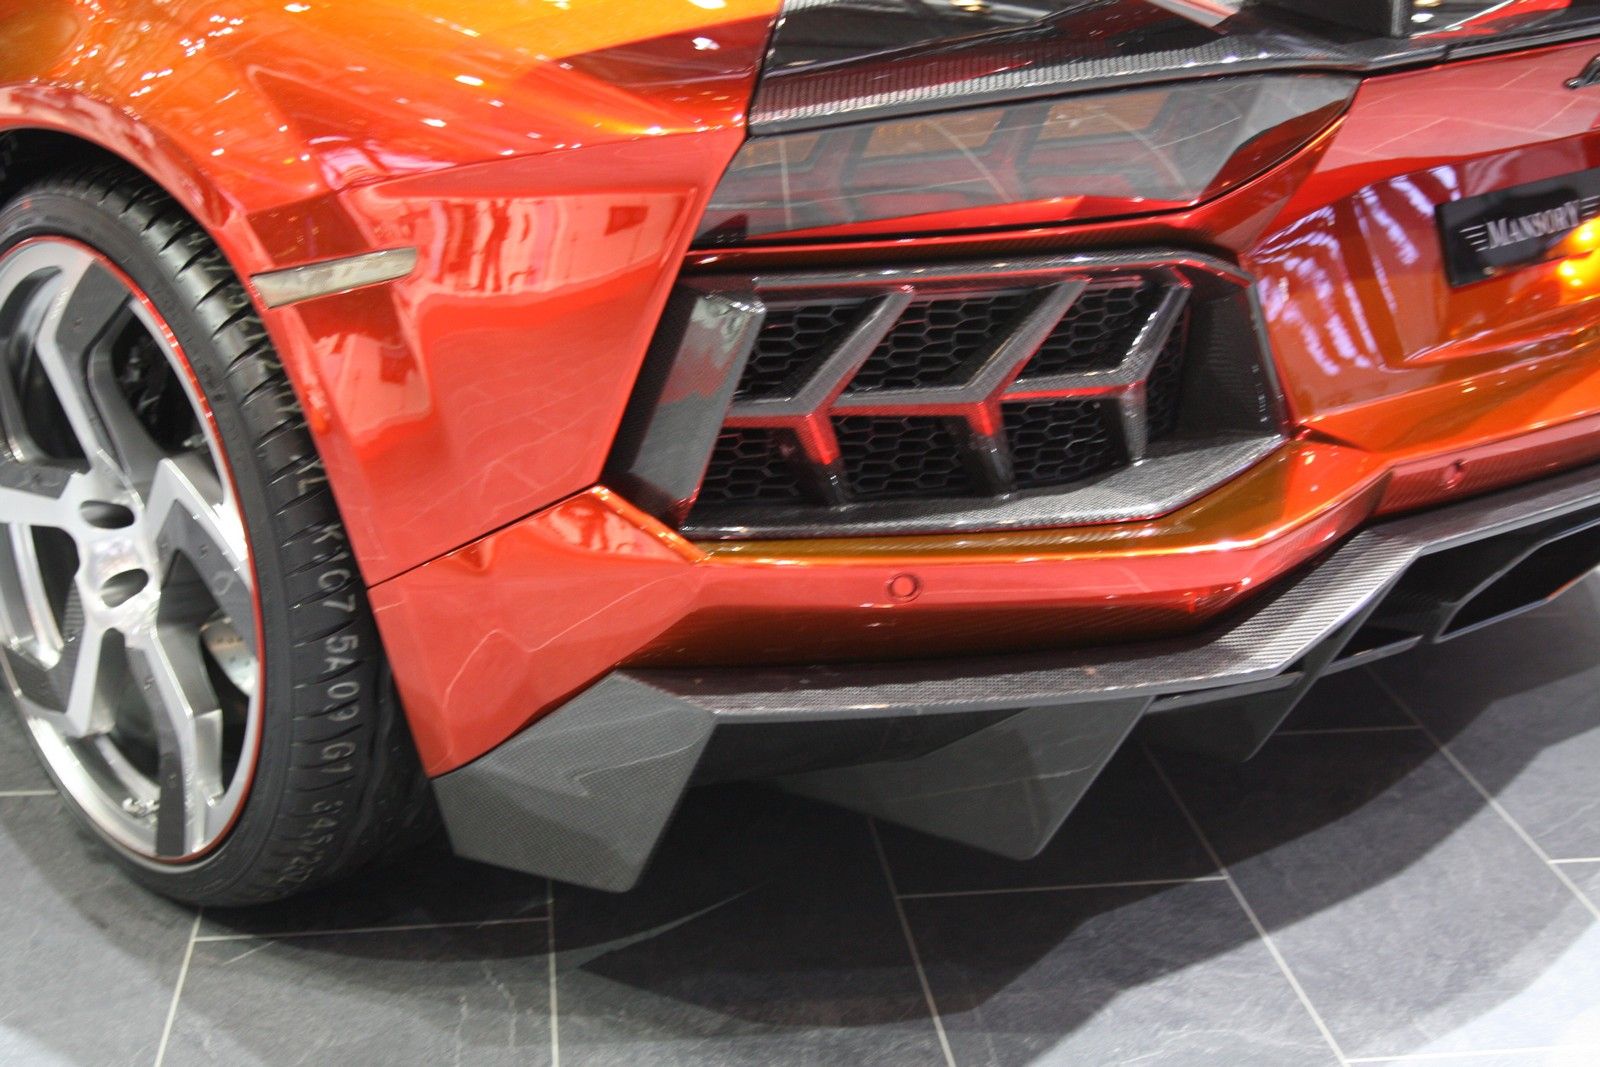 2012 Lamborghini Aventador by Mansory